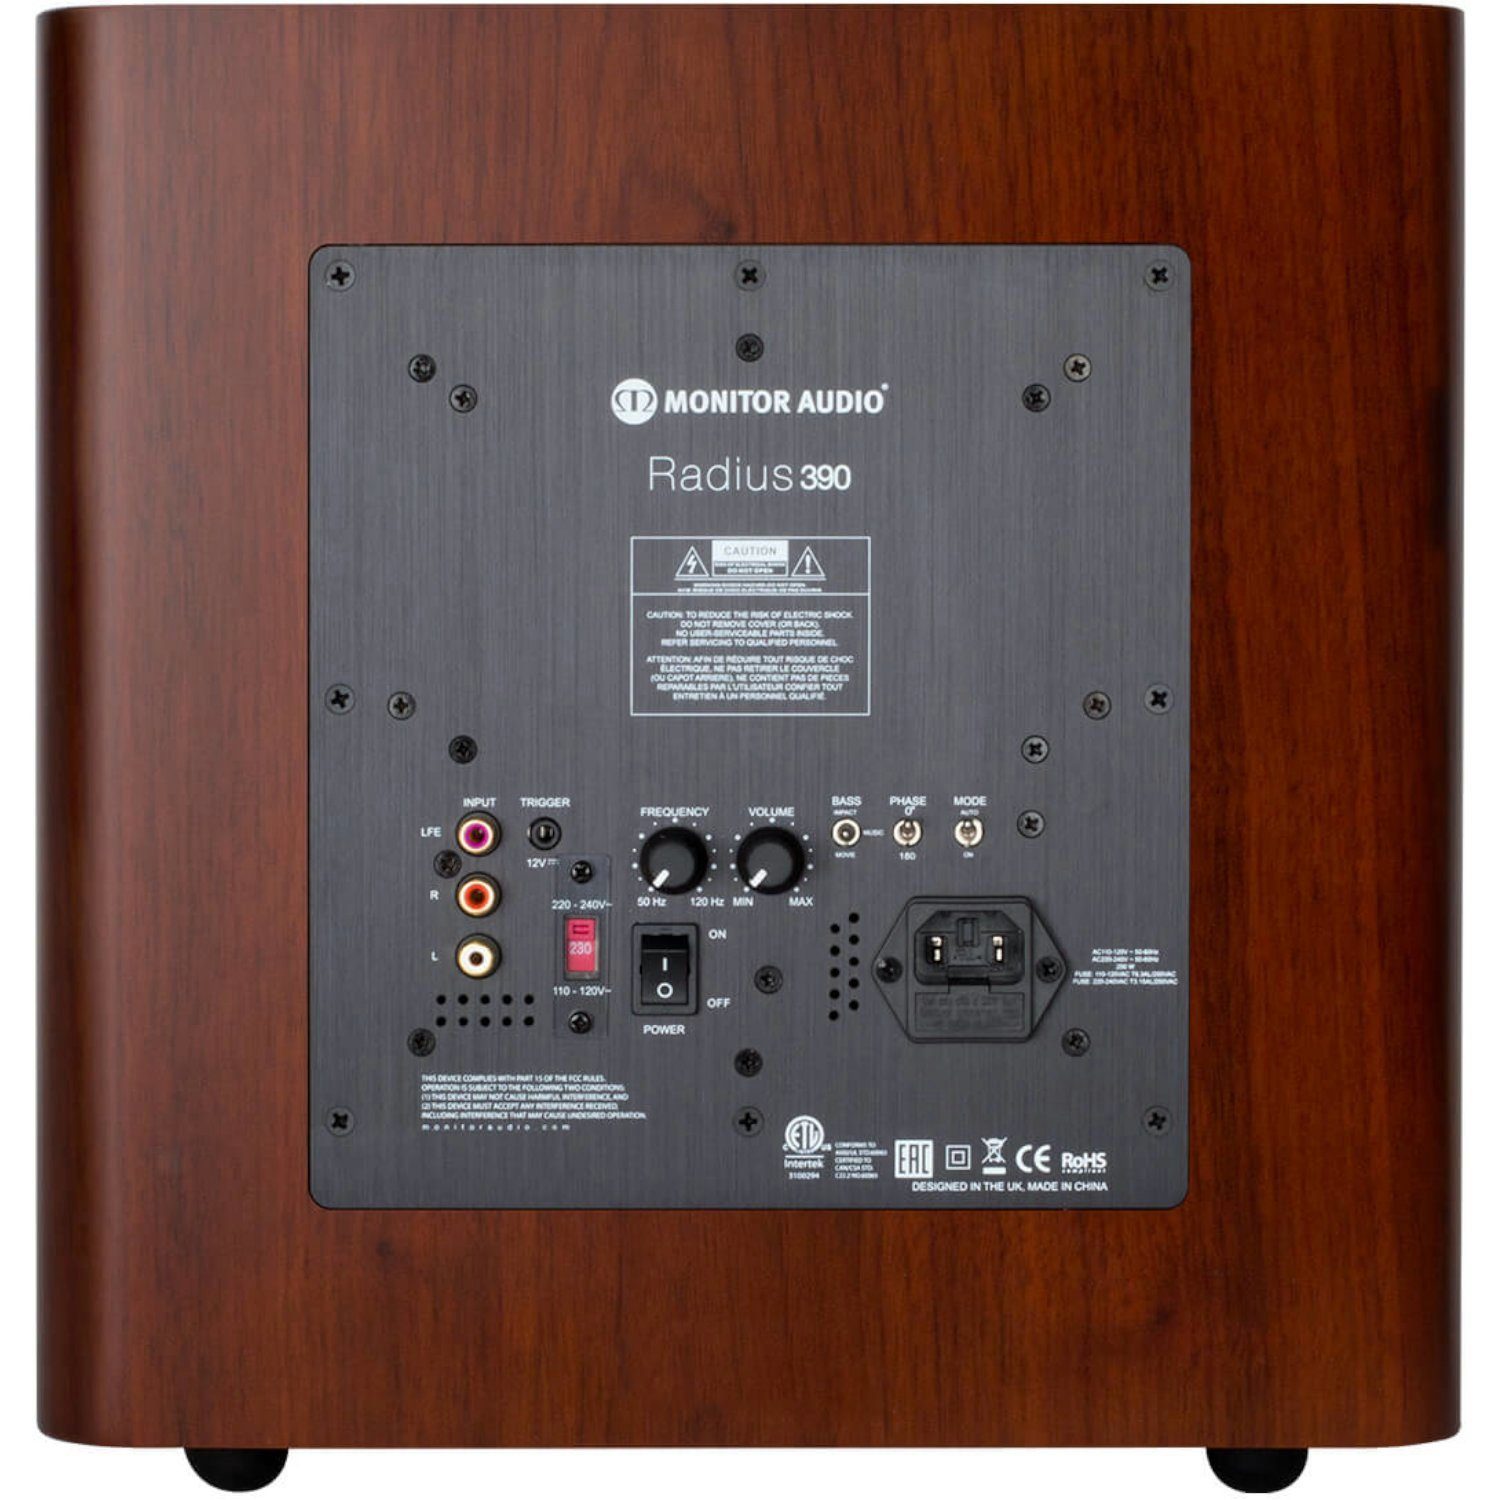 Audio AUDIO 3G 390 Subwoofer Subwoofer Radius MONITOR Monitor braun